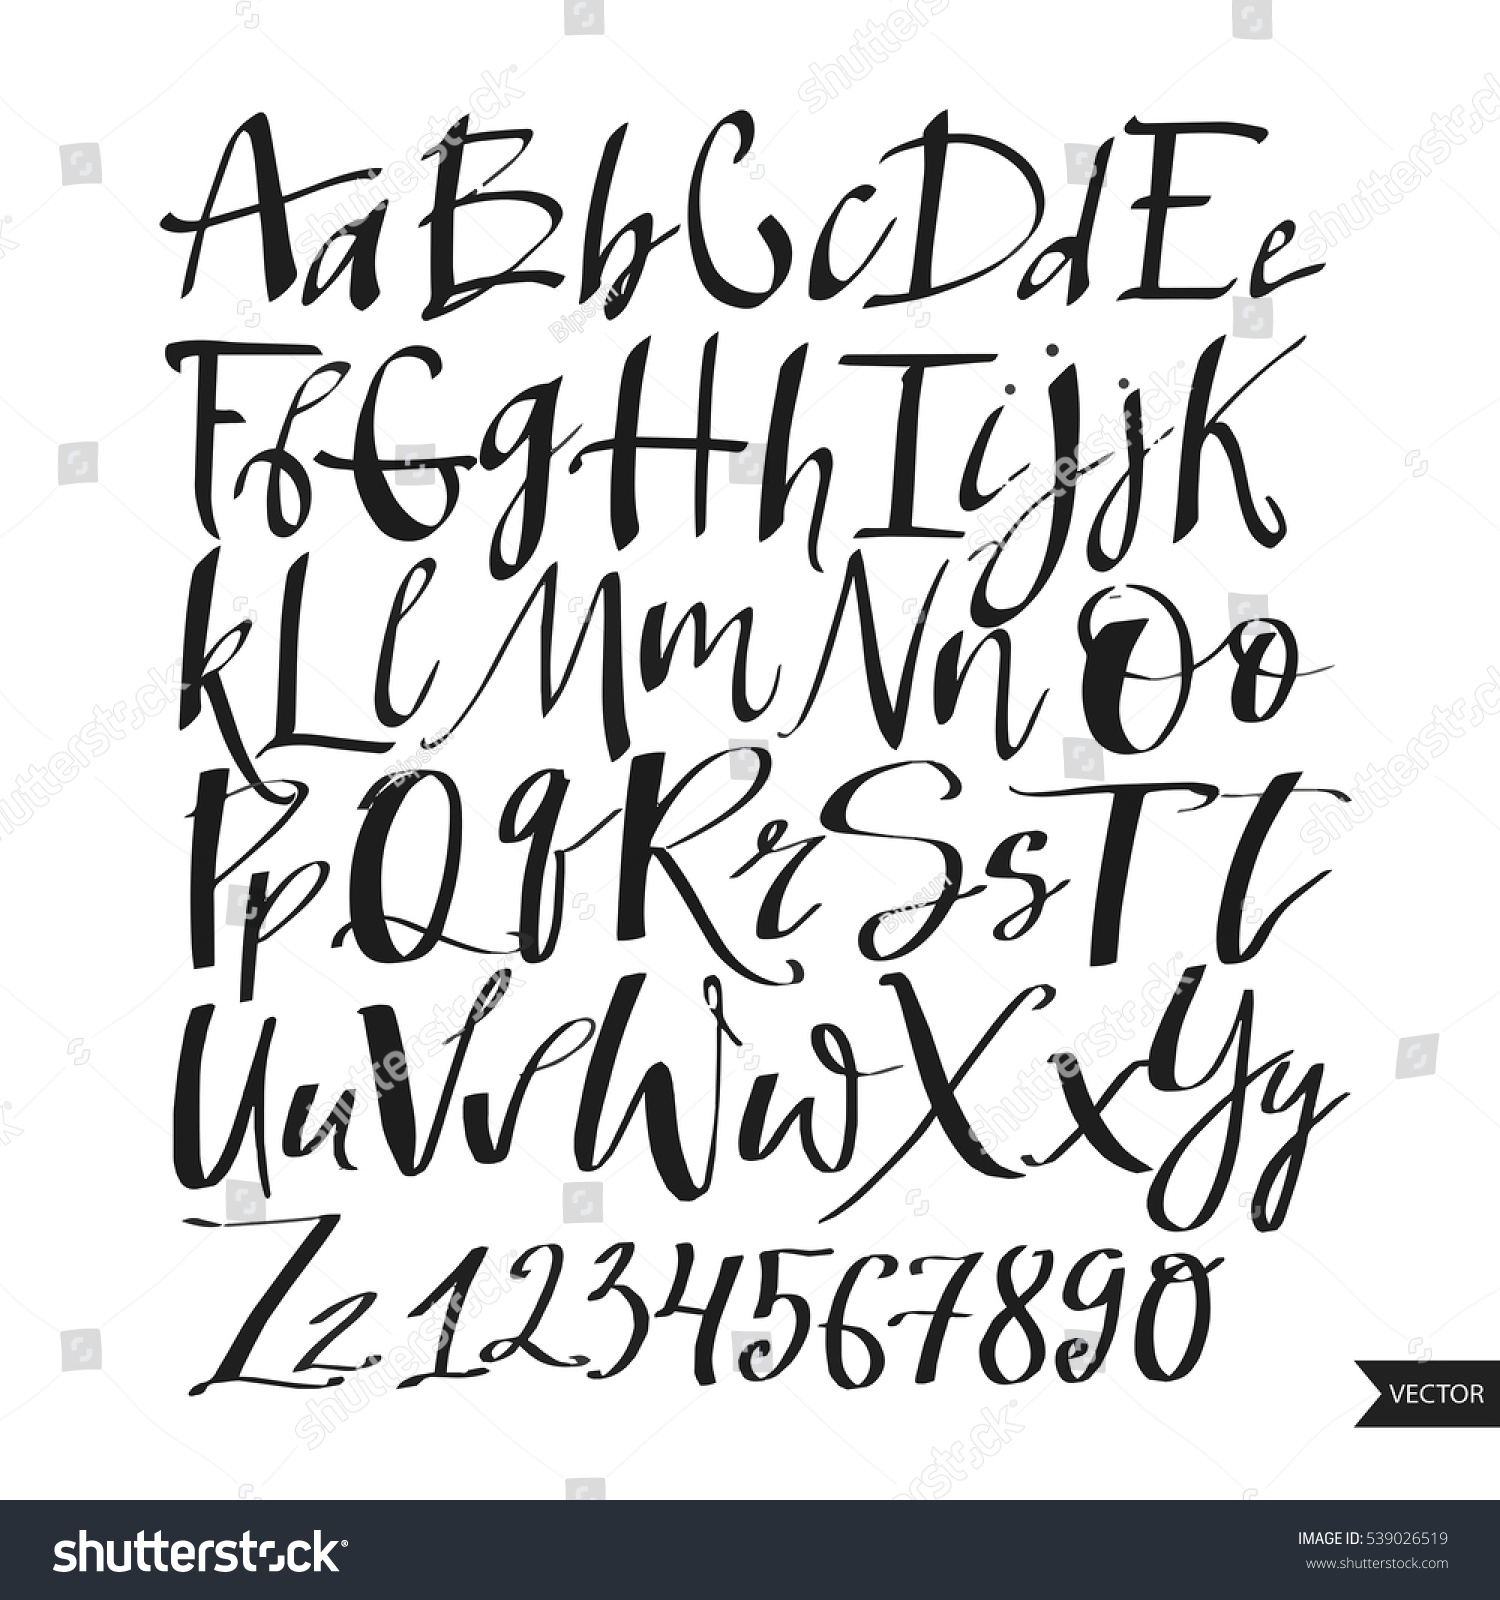 Alphabet Lettersblack Handwritten Font Drawn Liquid Stock Vector ...